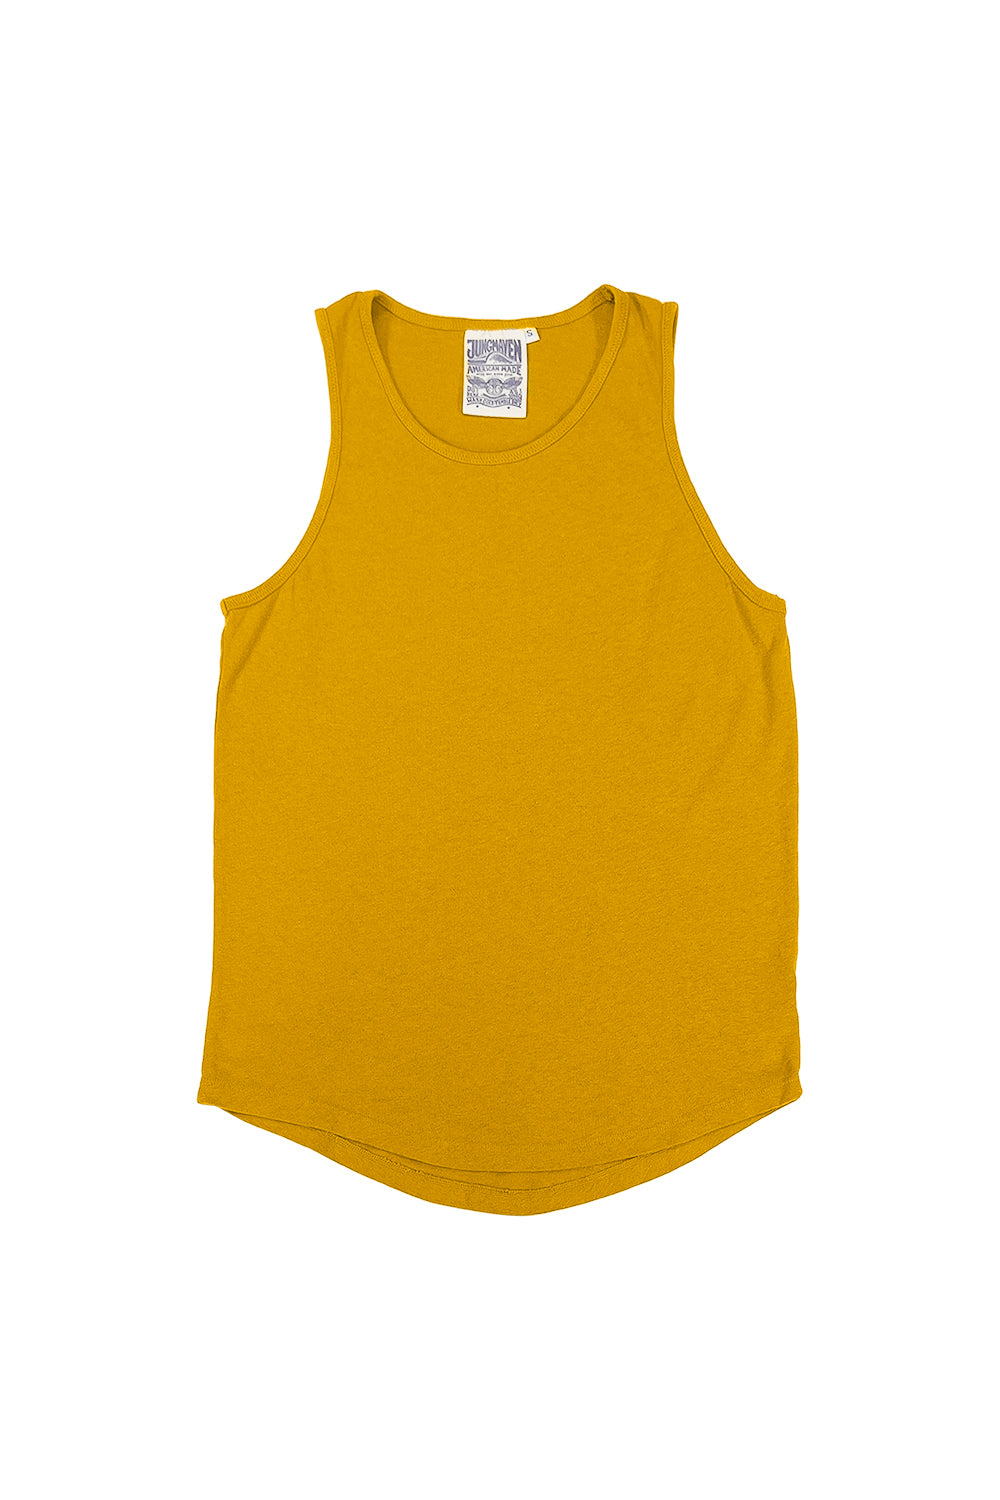 Tank Top | Jungmaven Hemp Clothing & Accessories / Color: Spicy Mustard